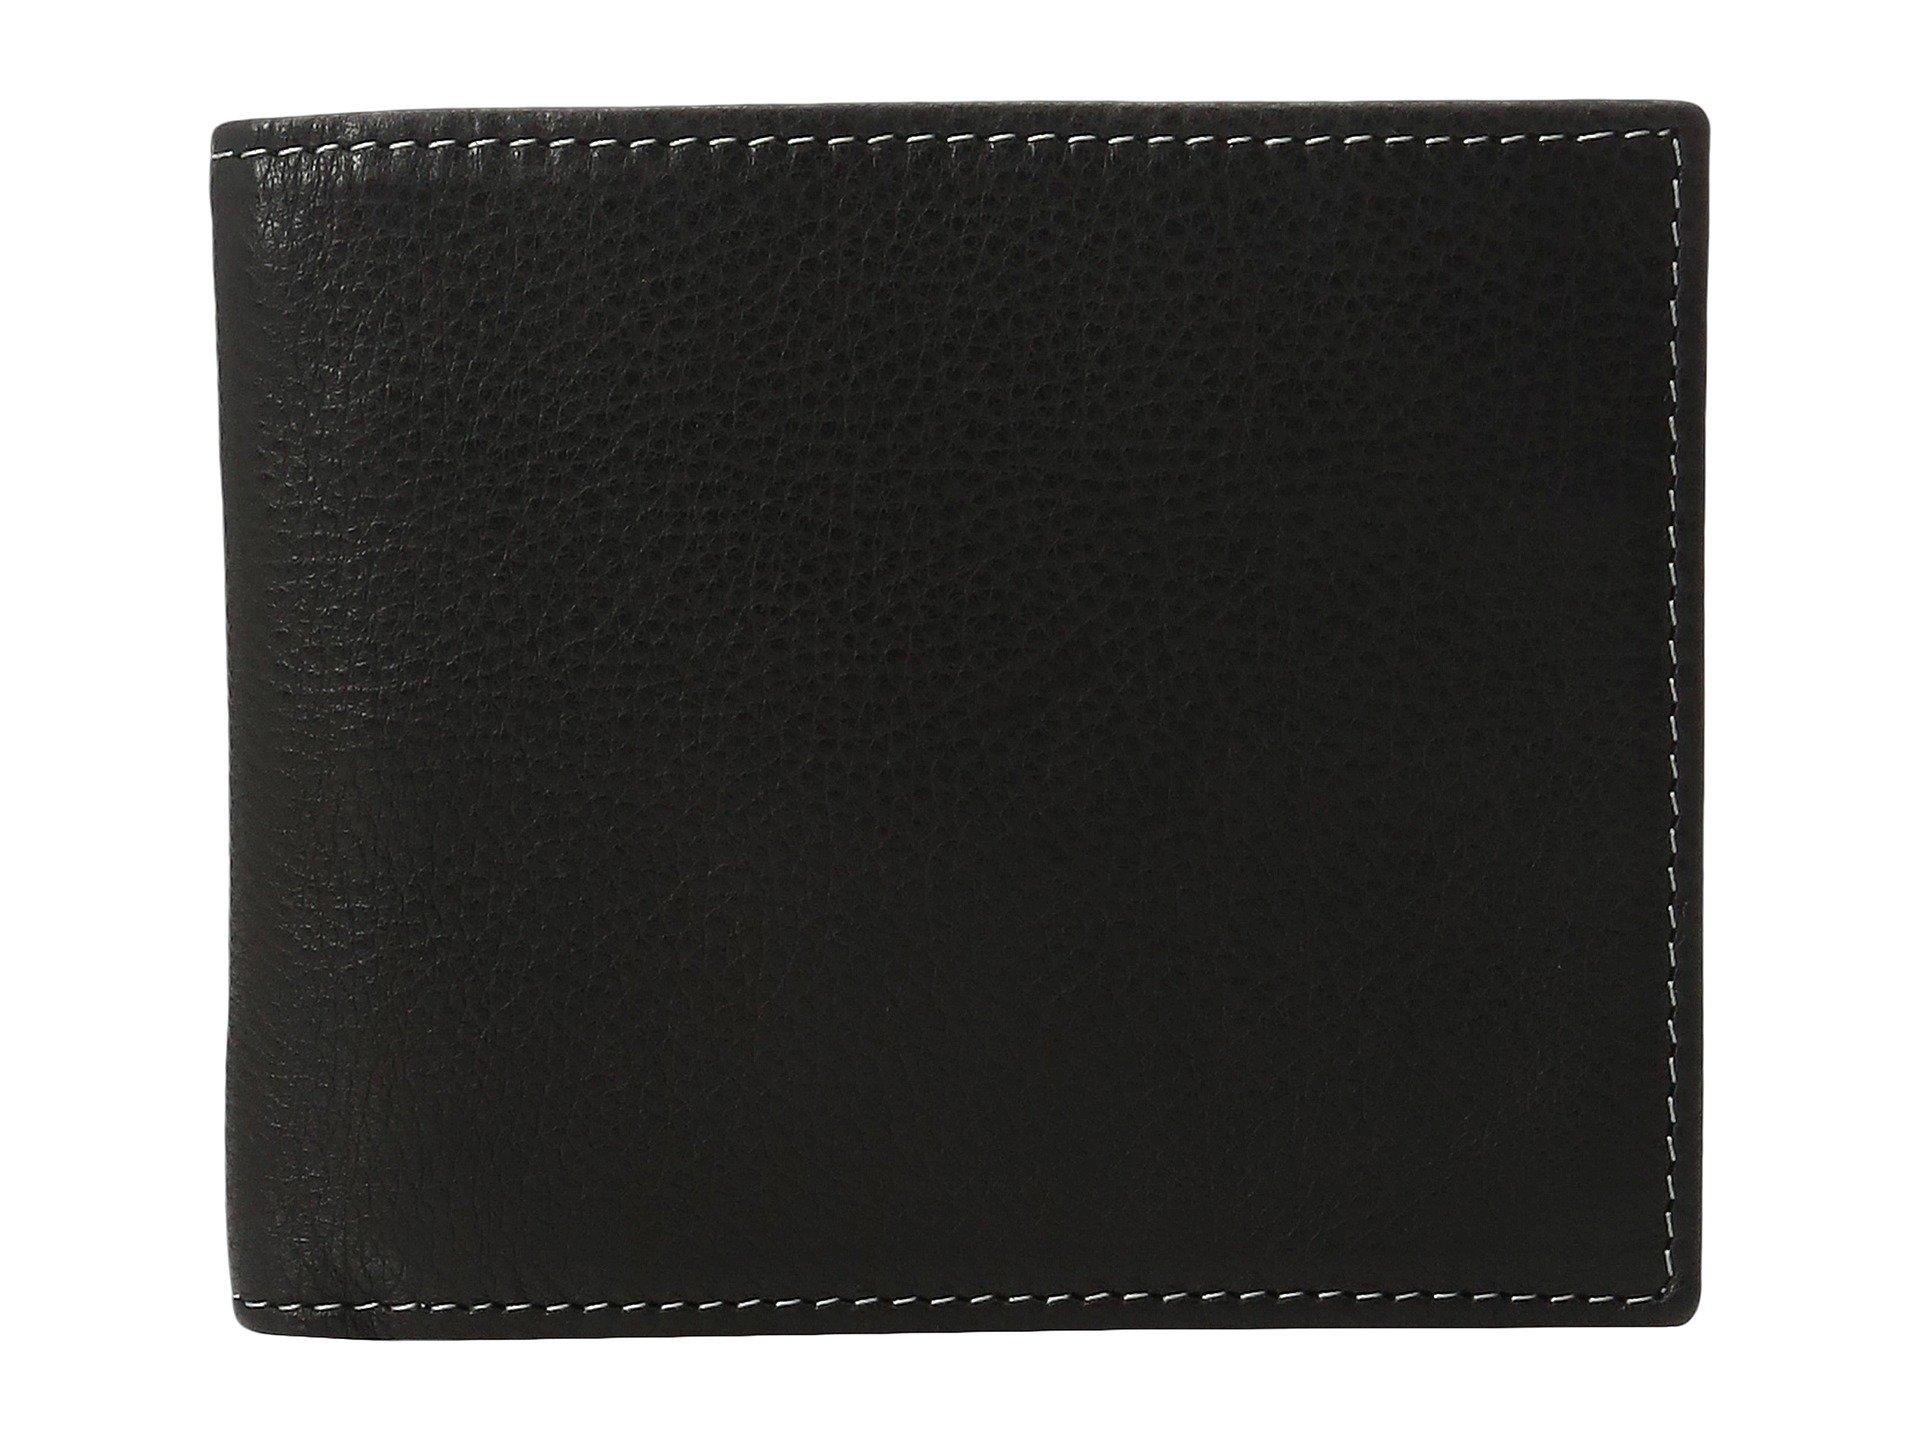 Johnston & Murphy Leather Slimfold Wallet in Black for Men - Lyst